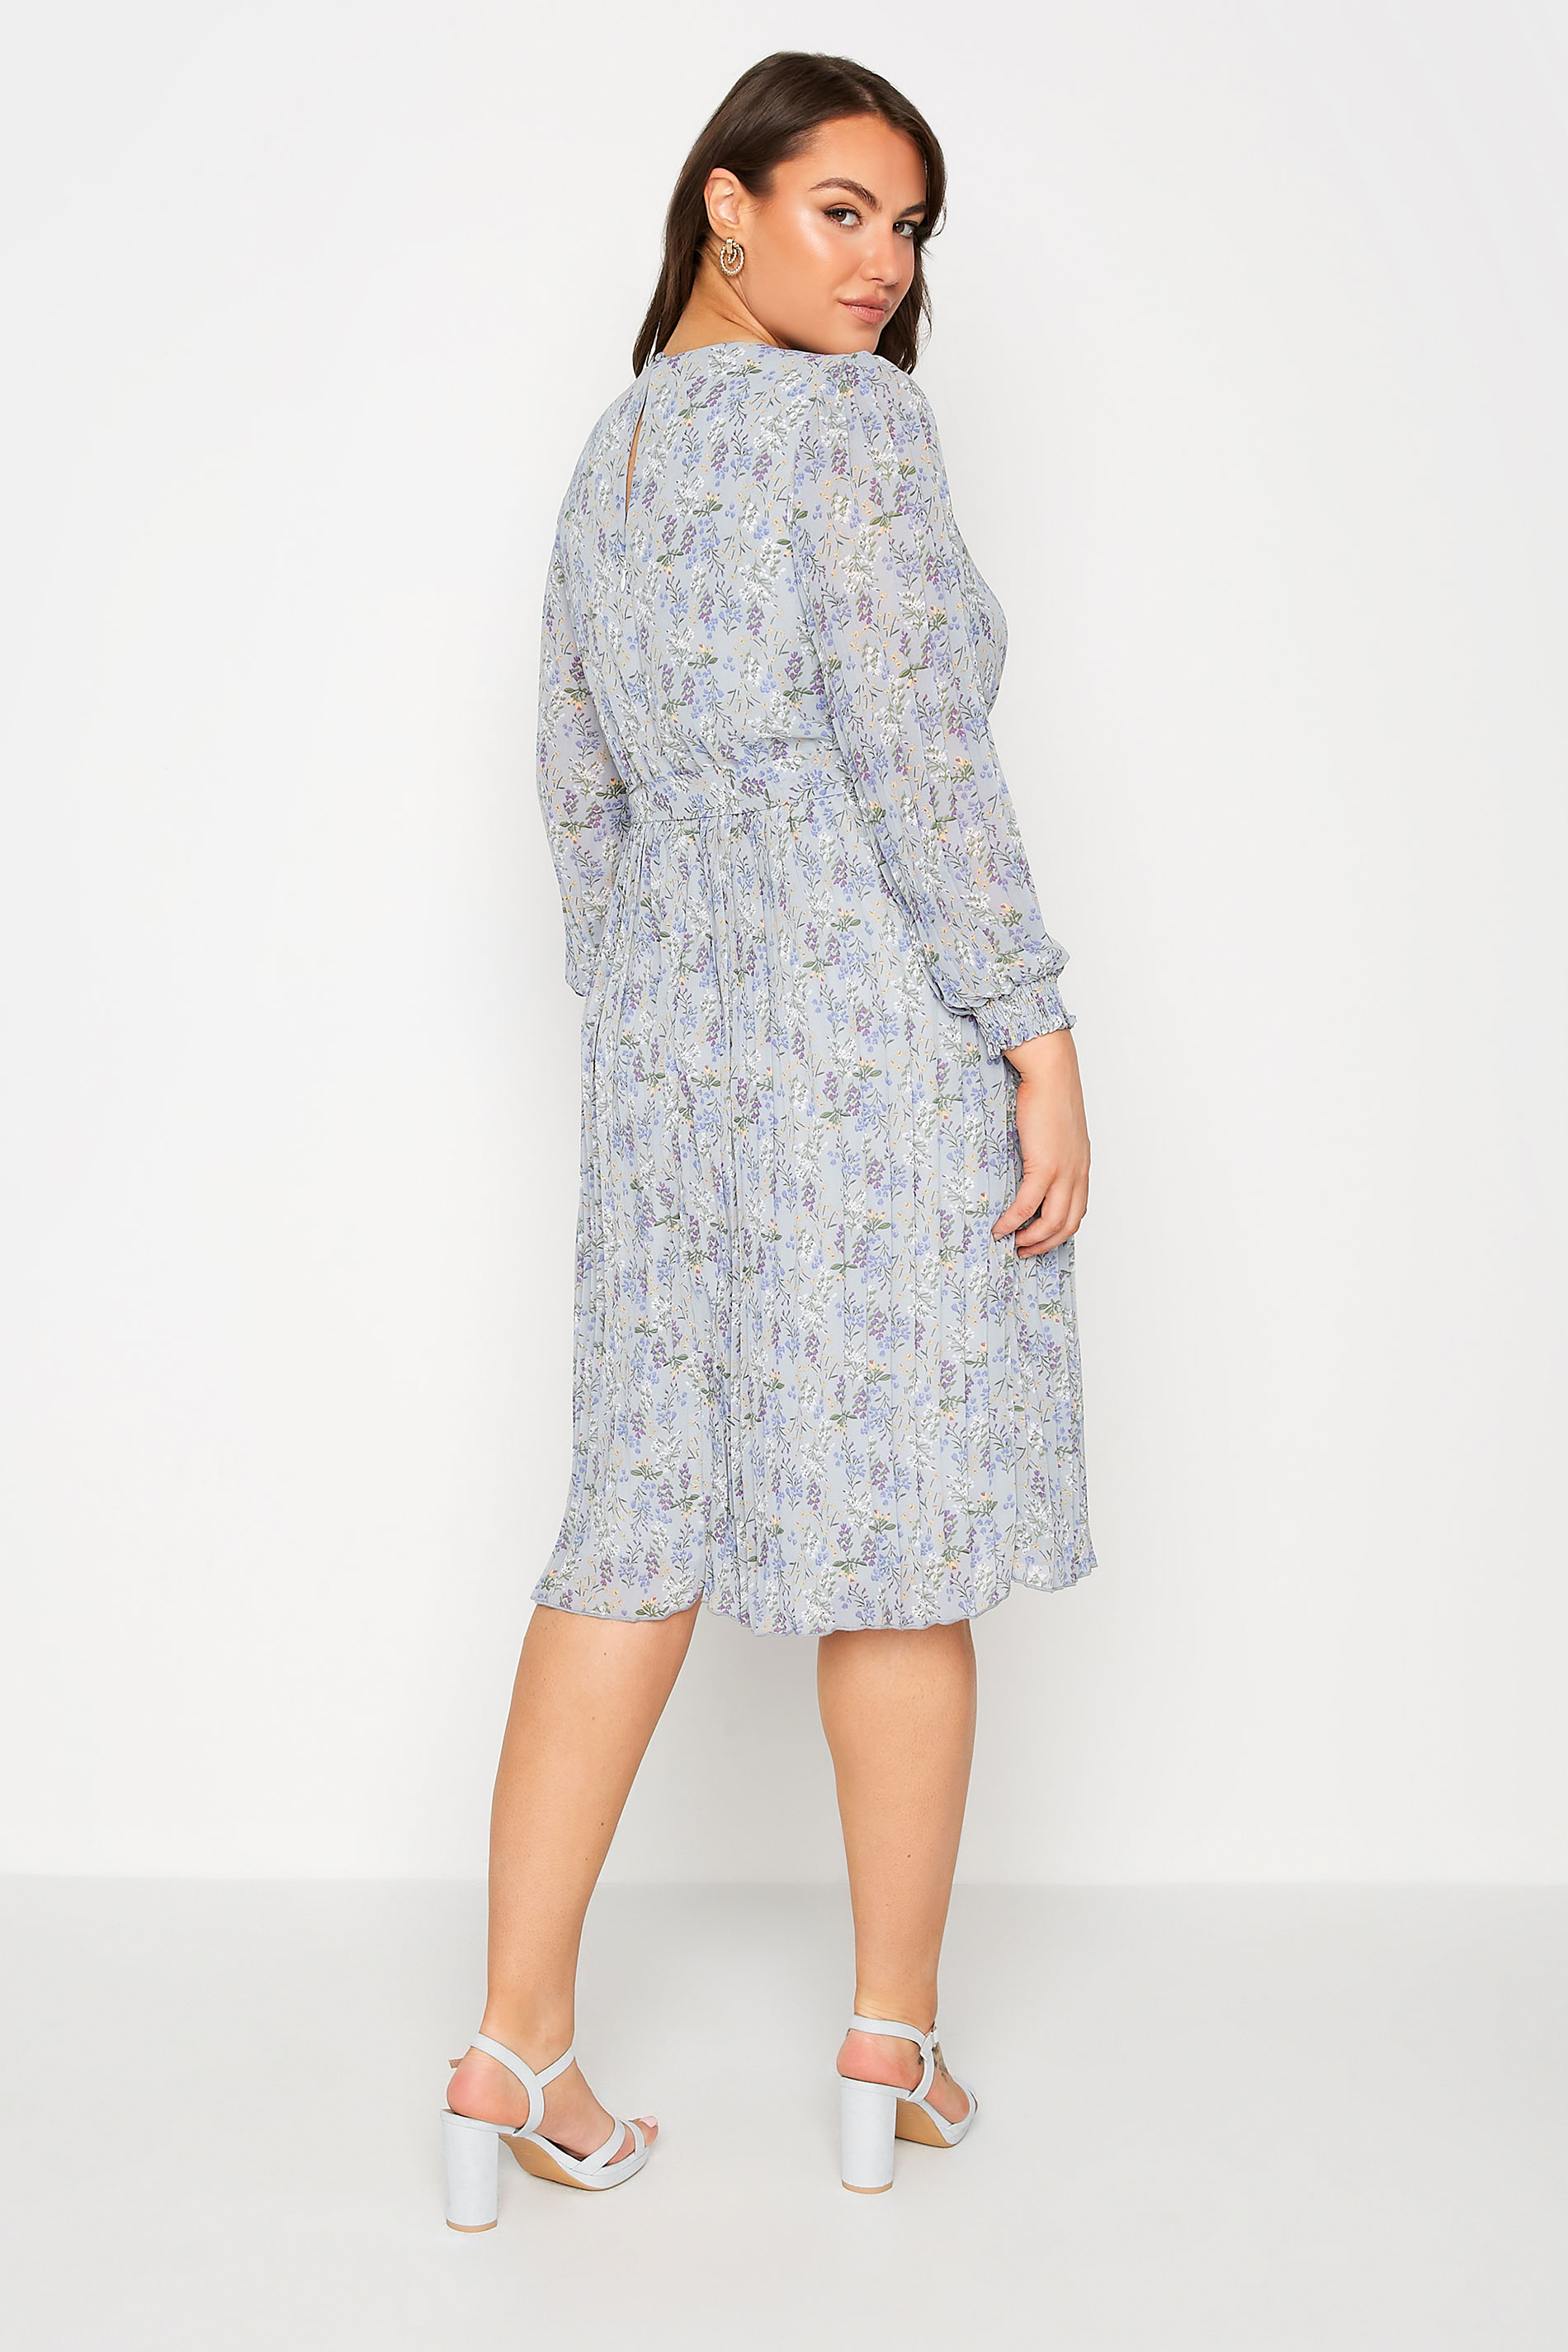 YOURS LONDON Plus Size Blue Floral Pleat Midi Dress | Yours Clothing 3